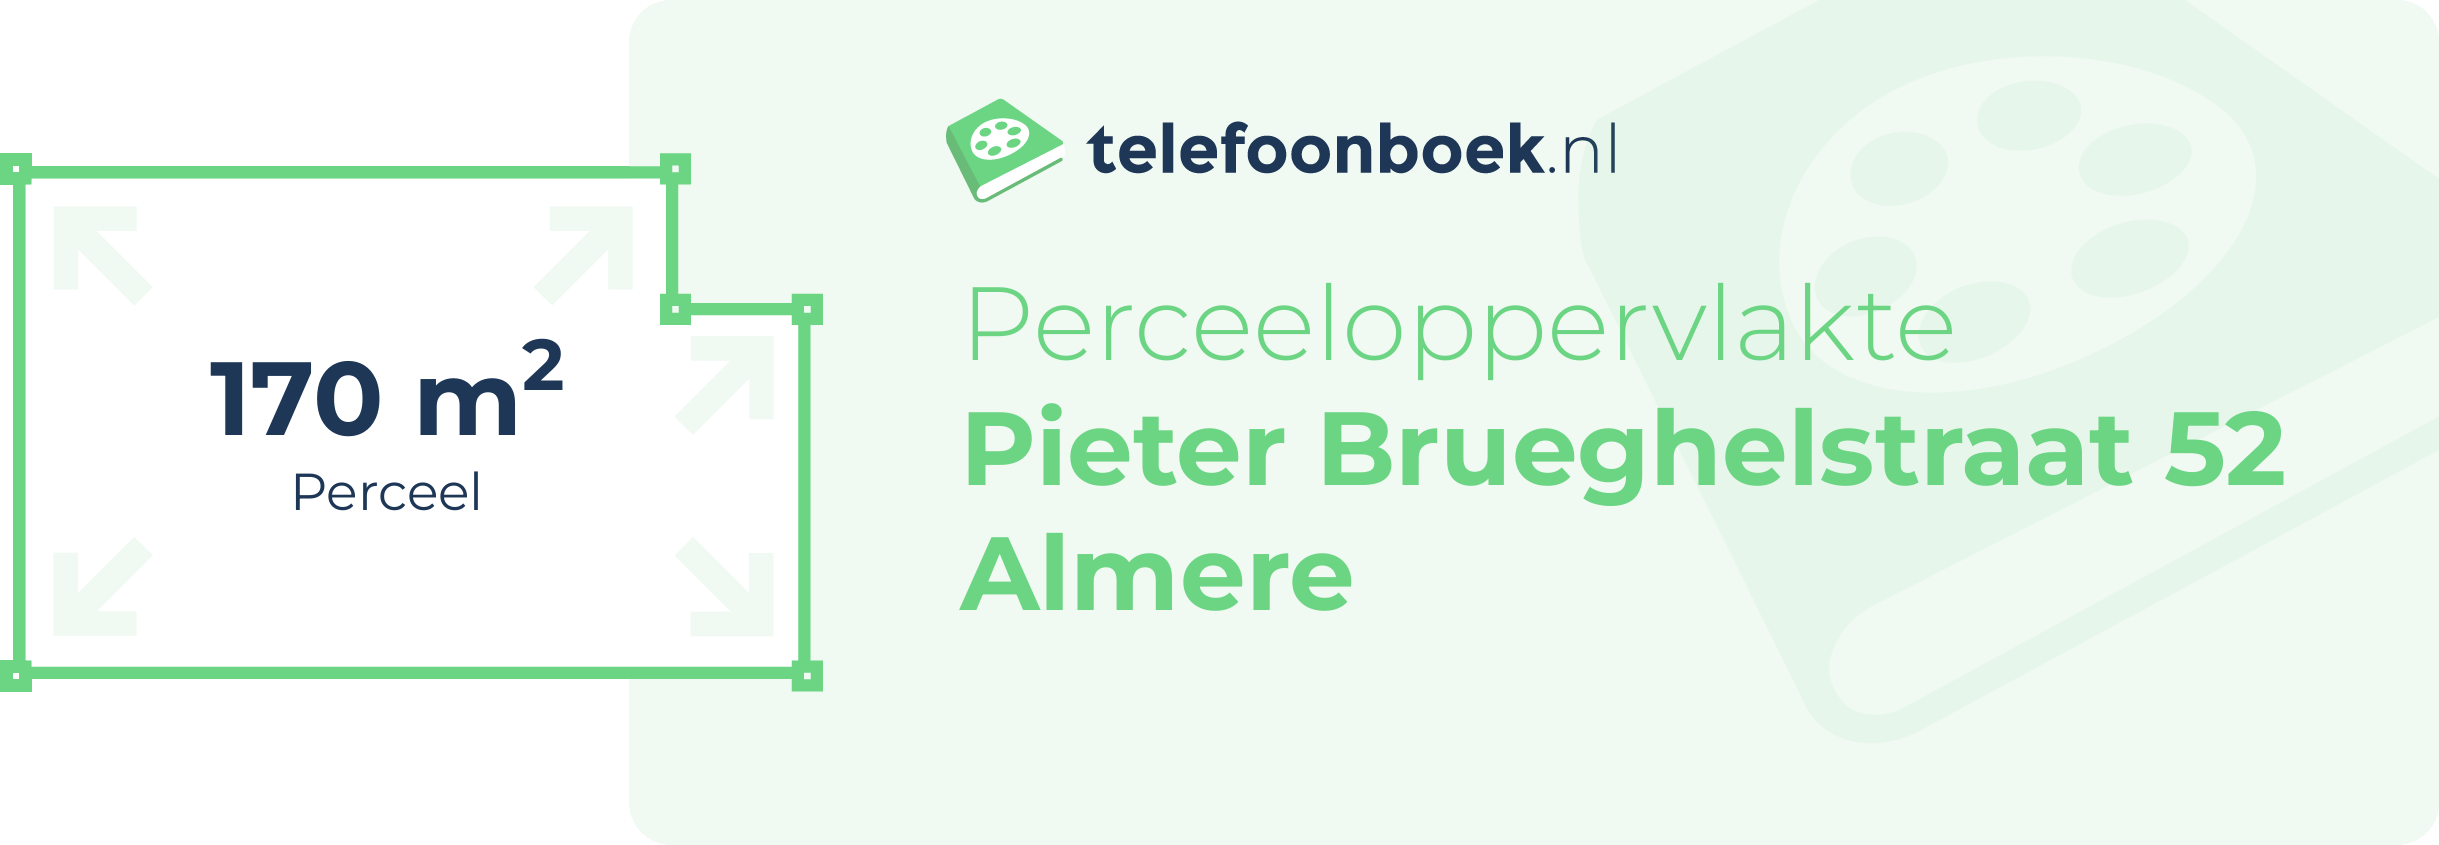 Perceeloppervlakte Pieter Brueghelstraat 52 Almere